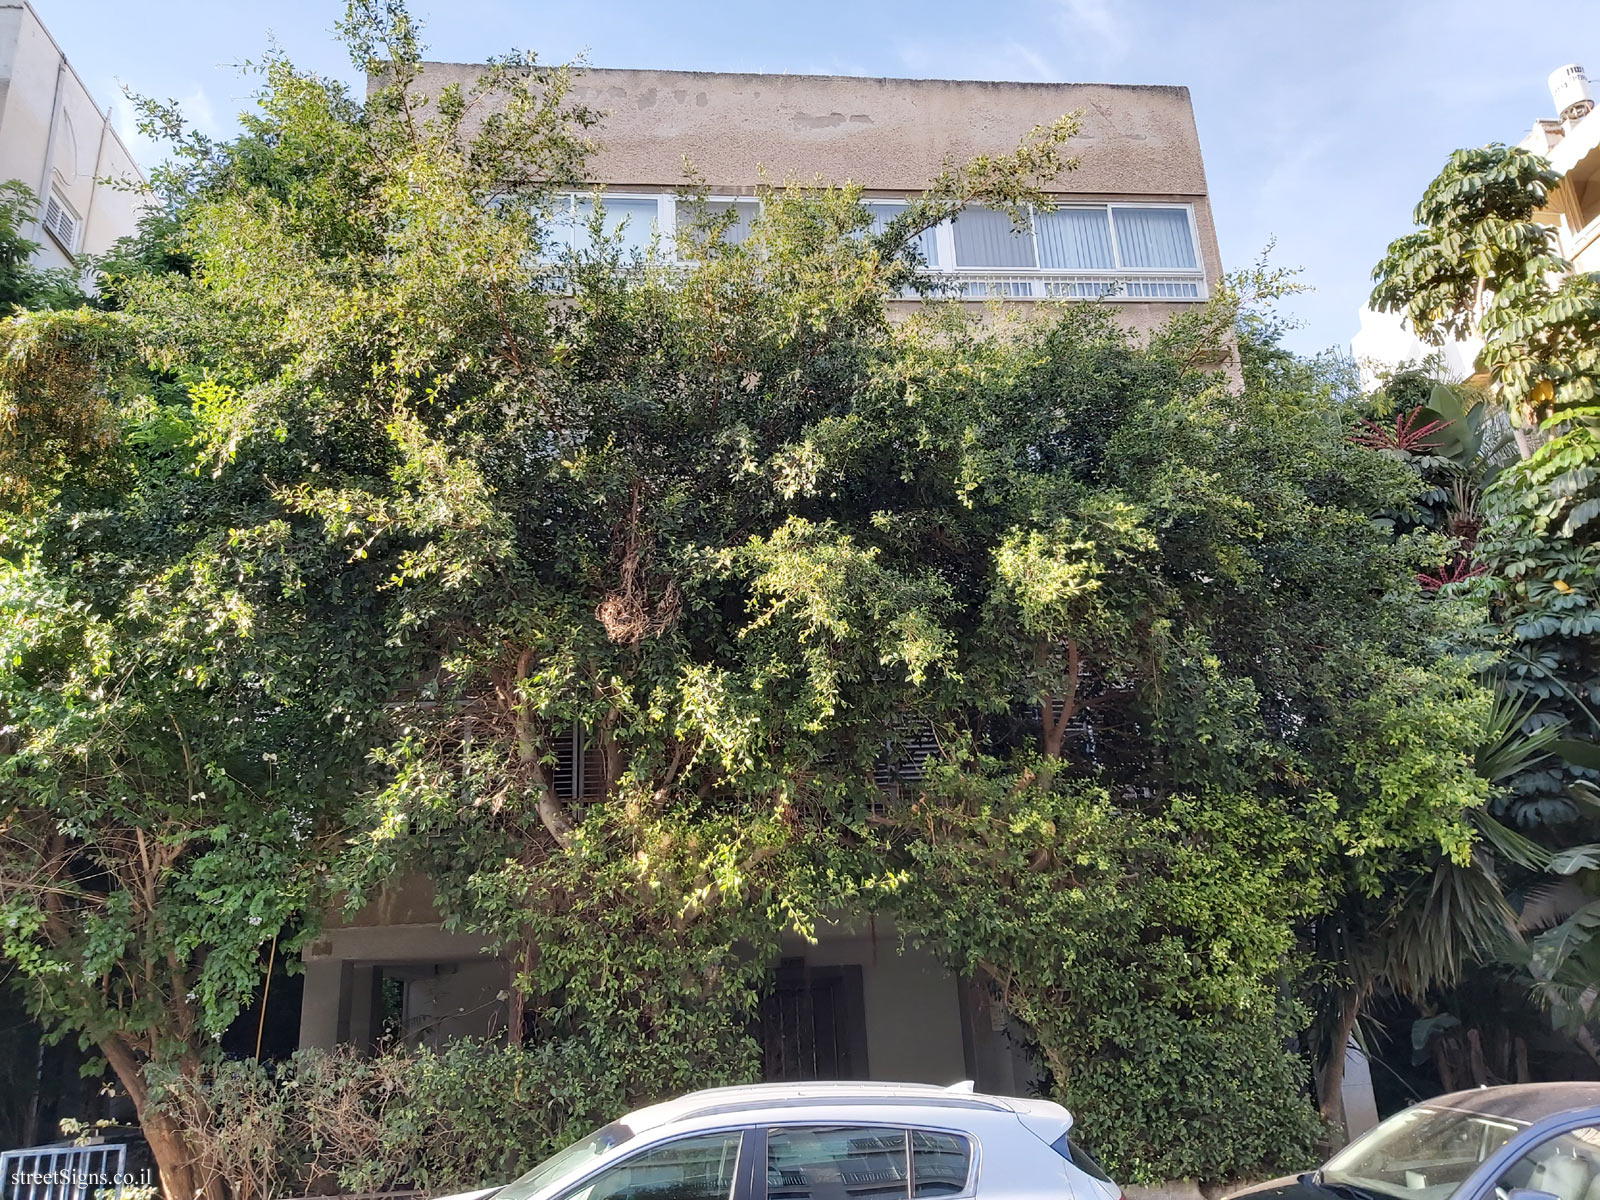 The house of Moshe Mokady - Liberman St 4, Tel Aviv-Yafo, Israel